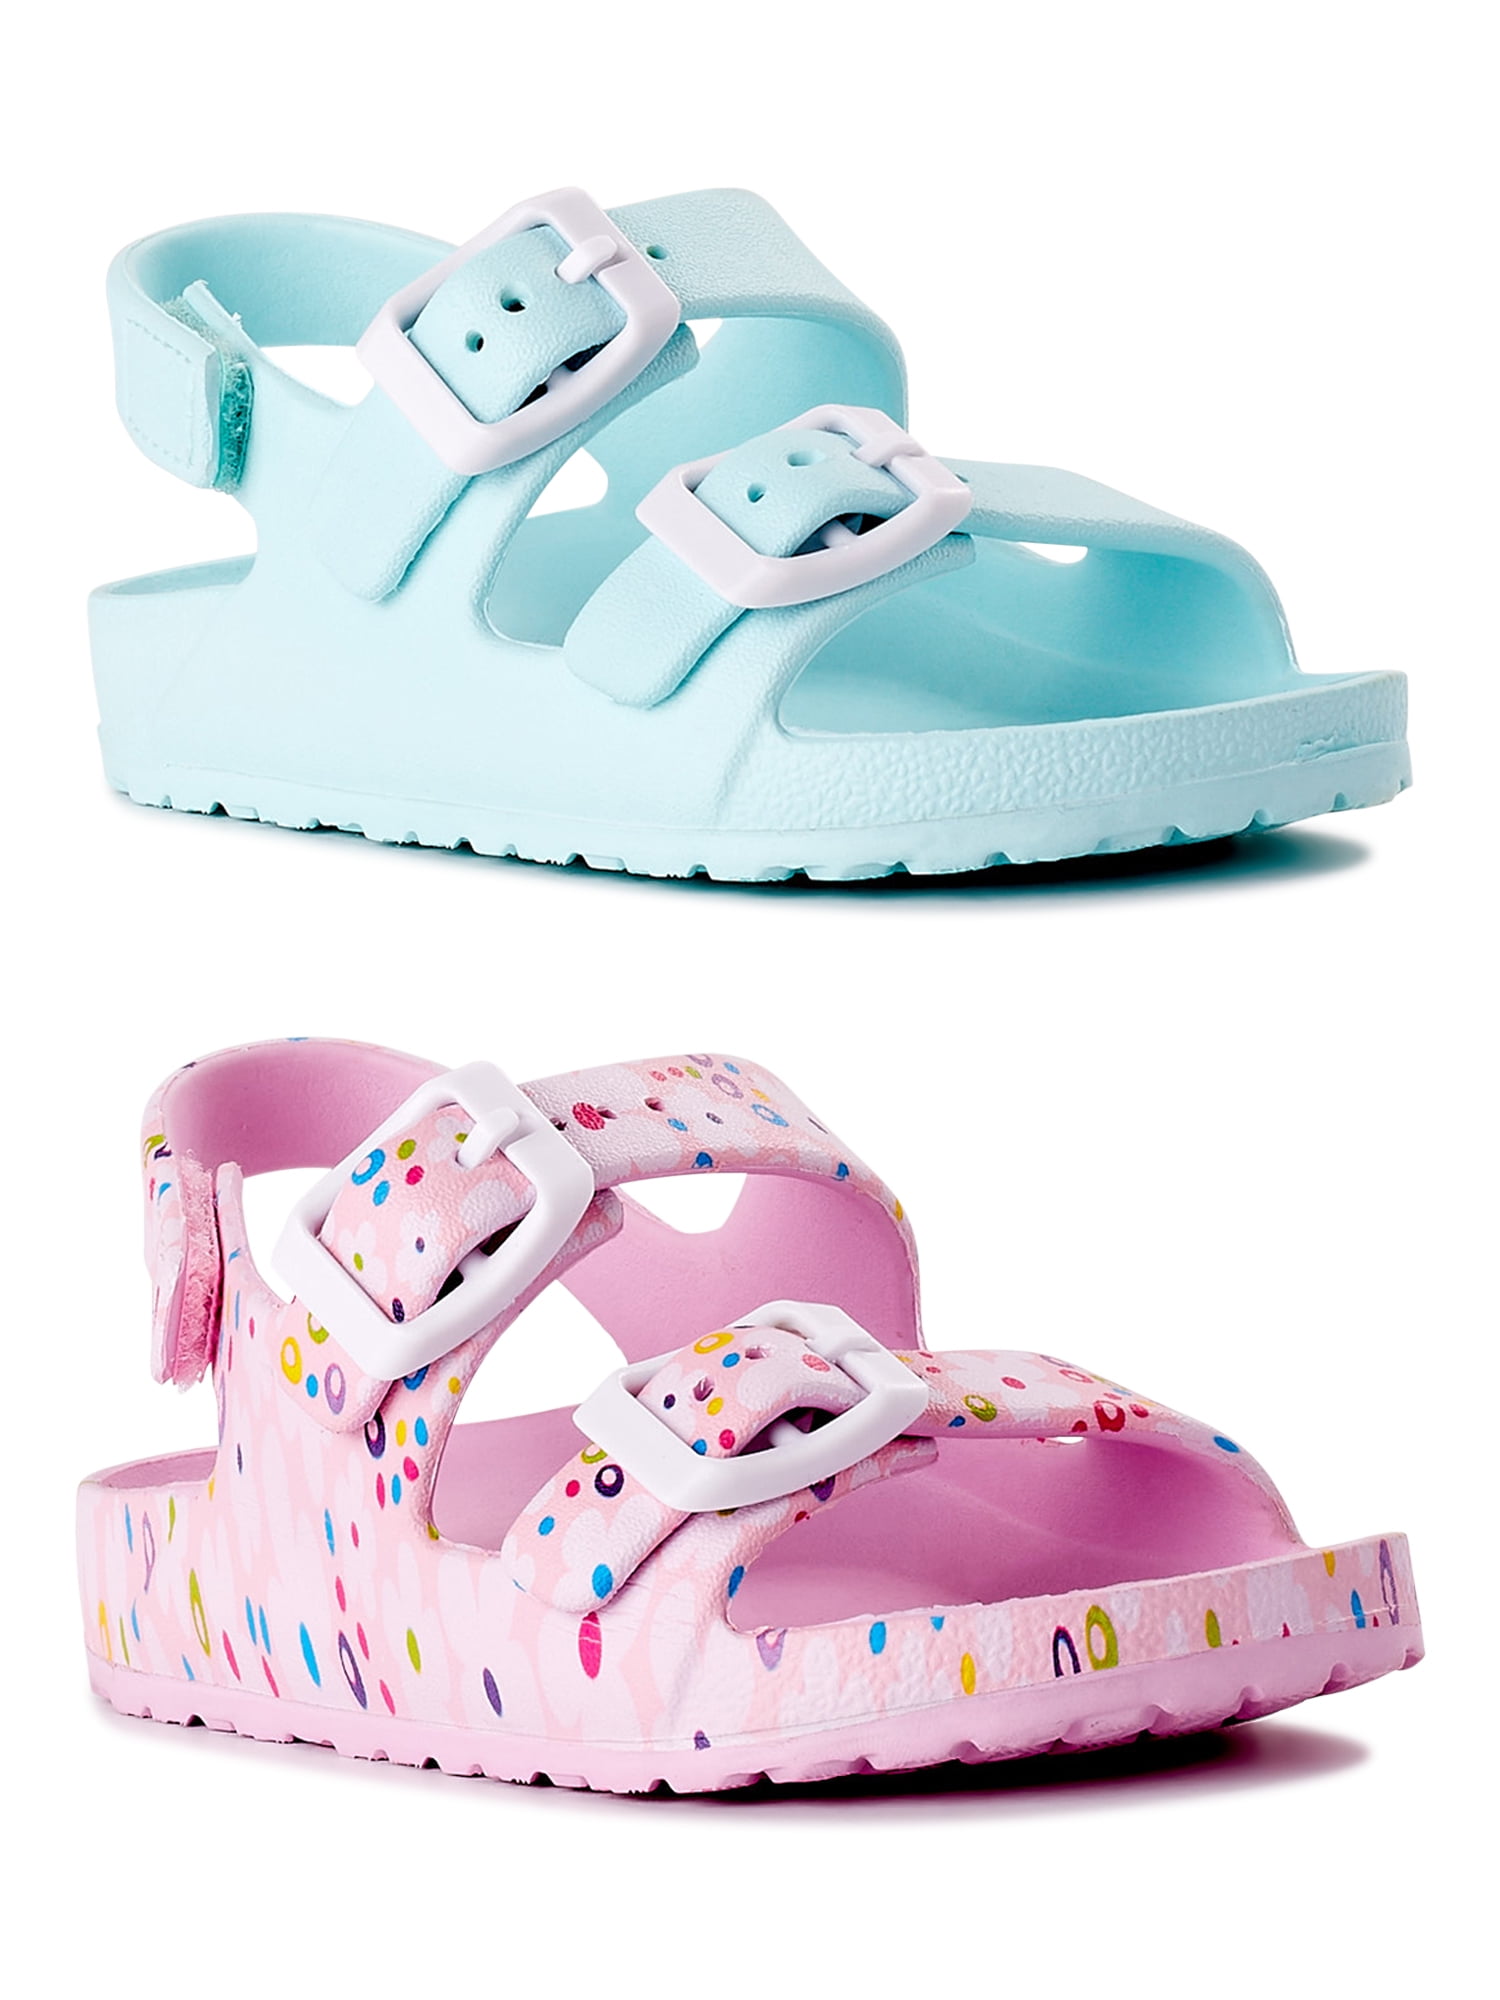 NEW Toddler Girls Water Shoes Large 9-10 Pink Mesh Slip On Aqua Socks Sandals 